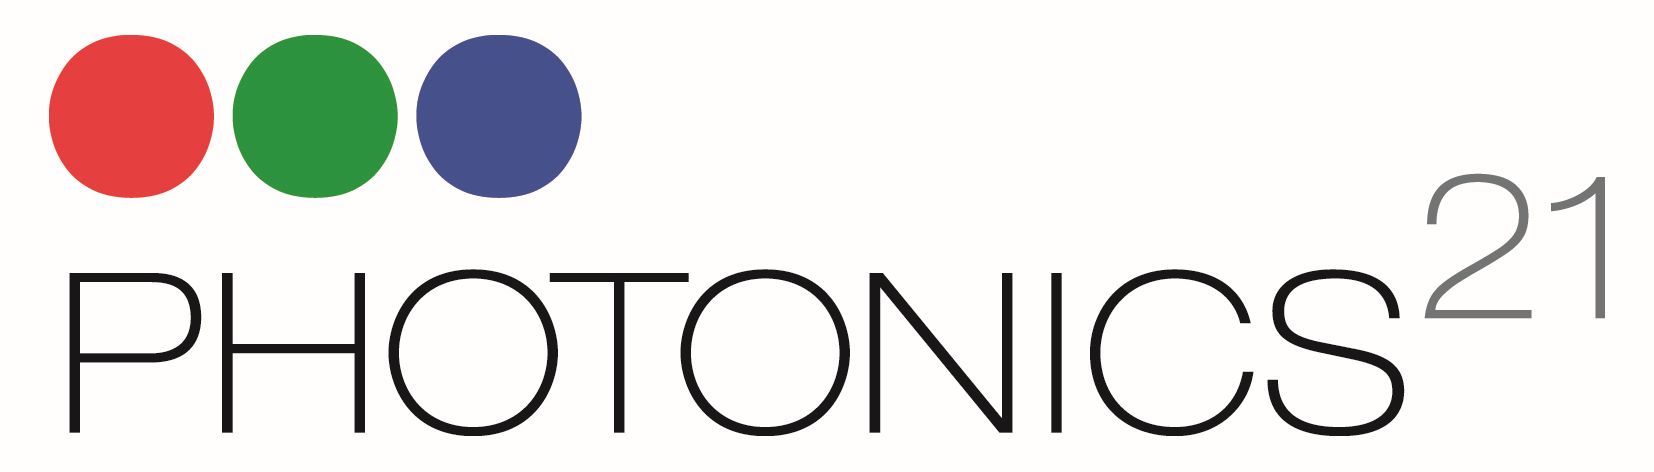 Photonics21 Logo